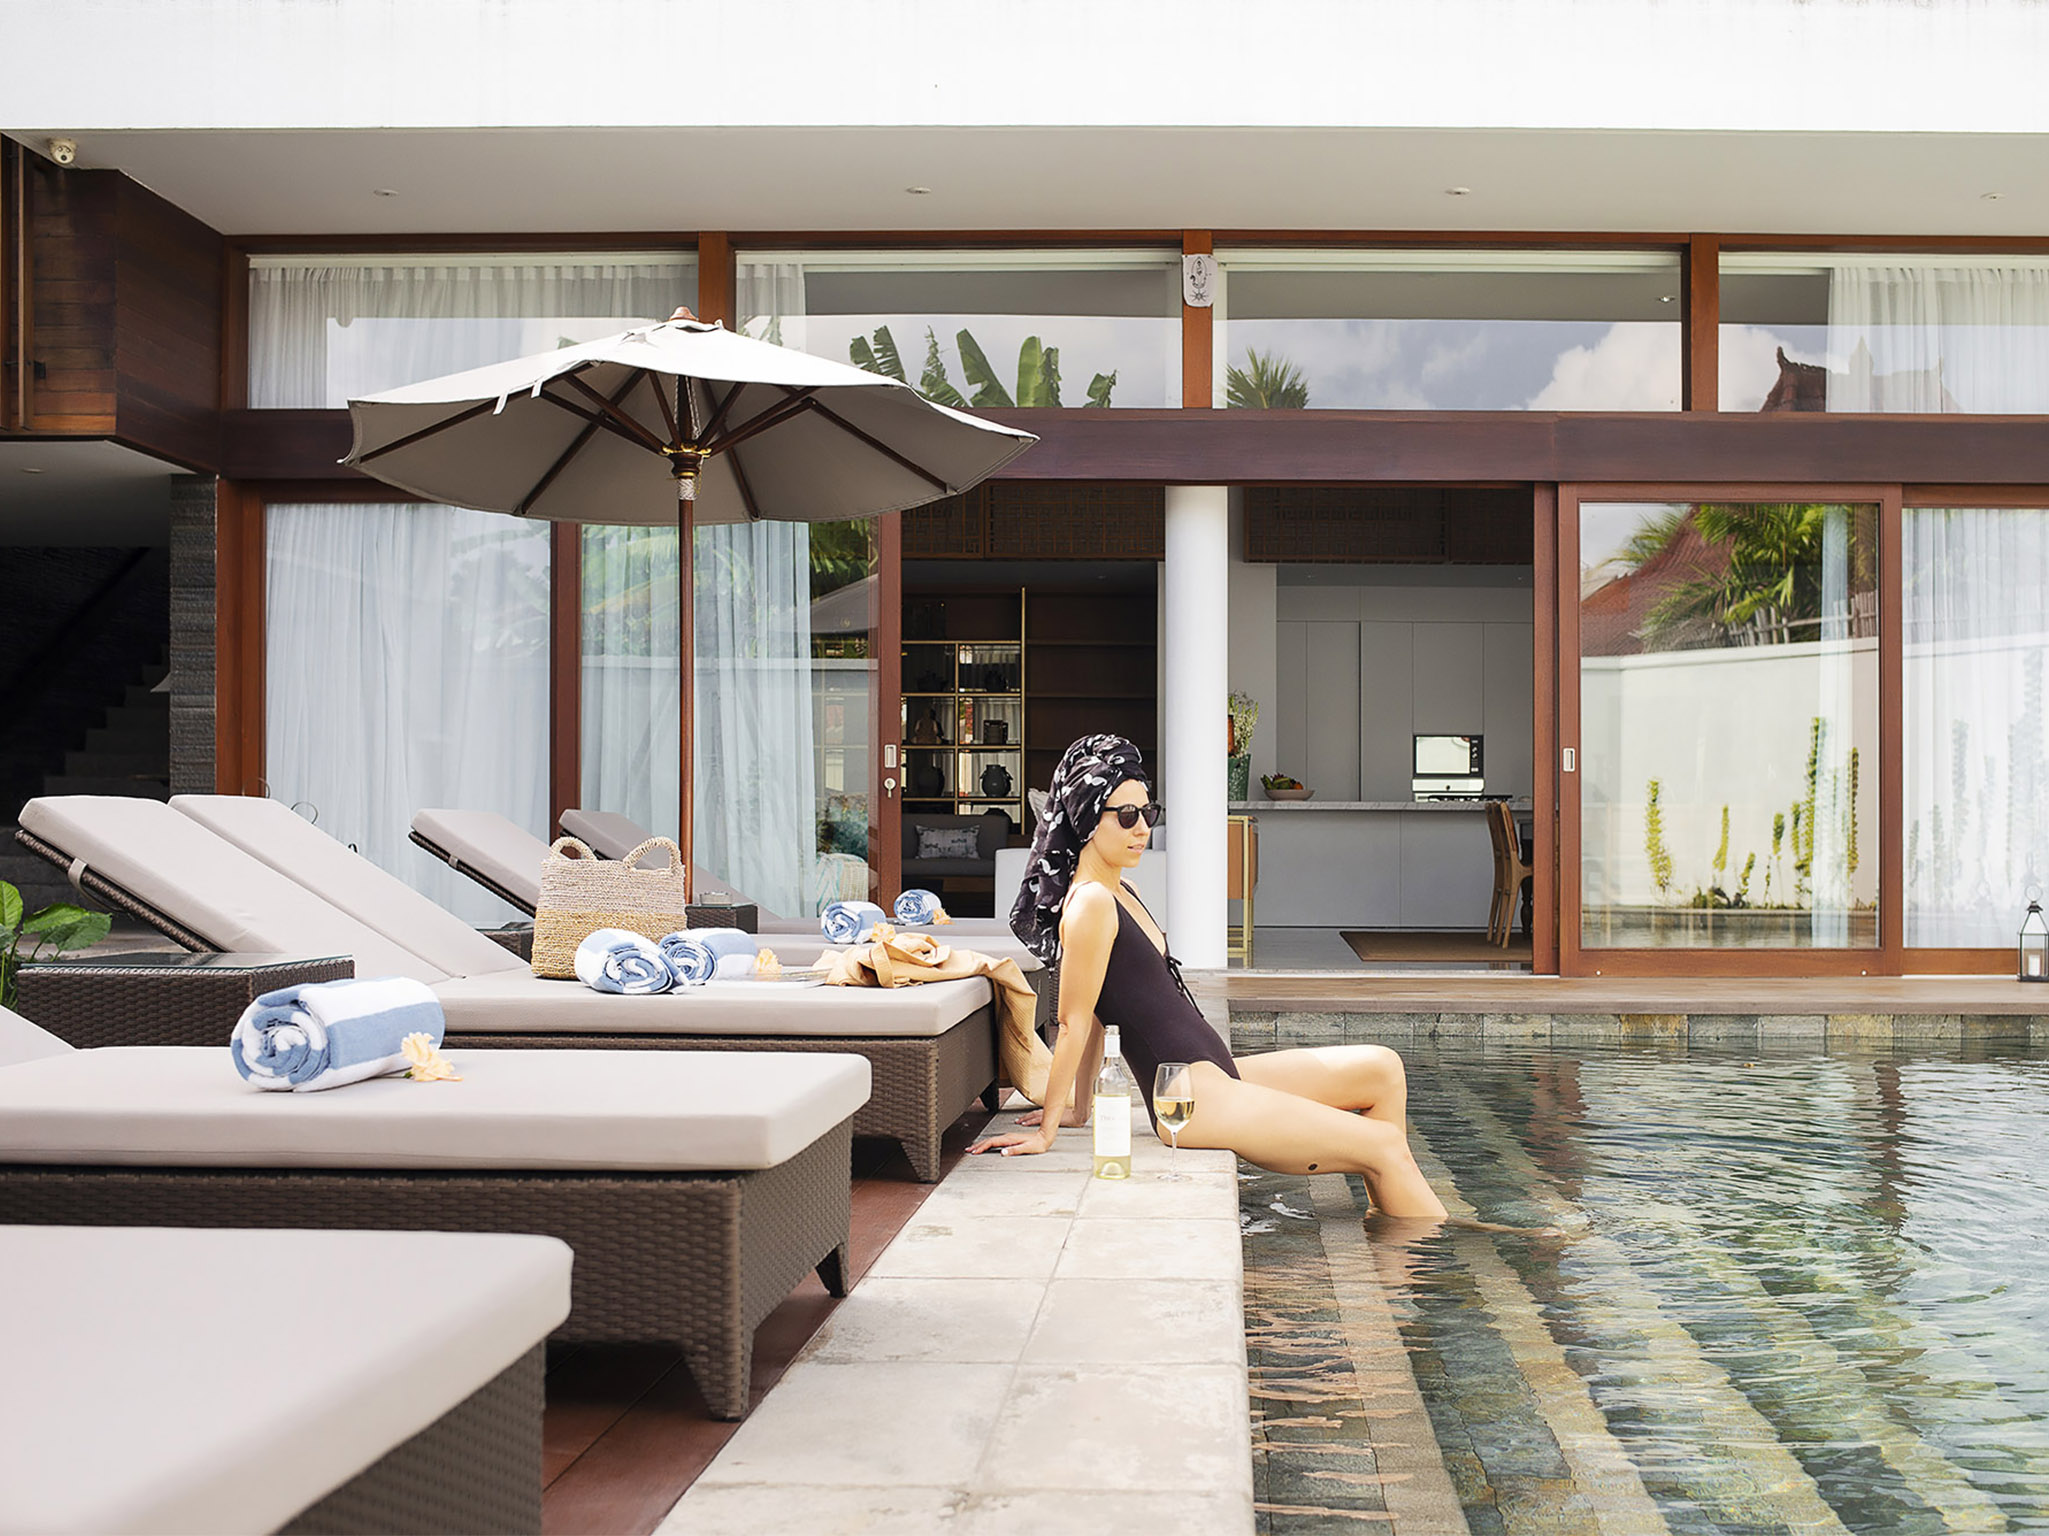 Villa Indrani - Sunloungers and the pool - Villa Indrani, Canggu, Bali